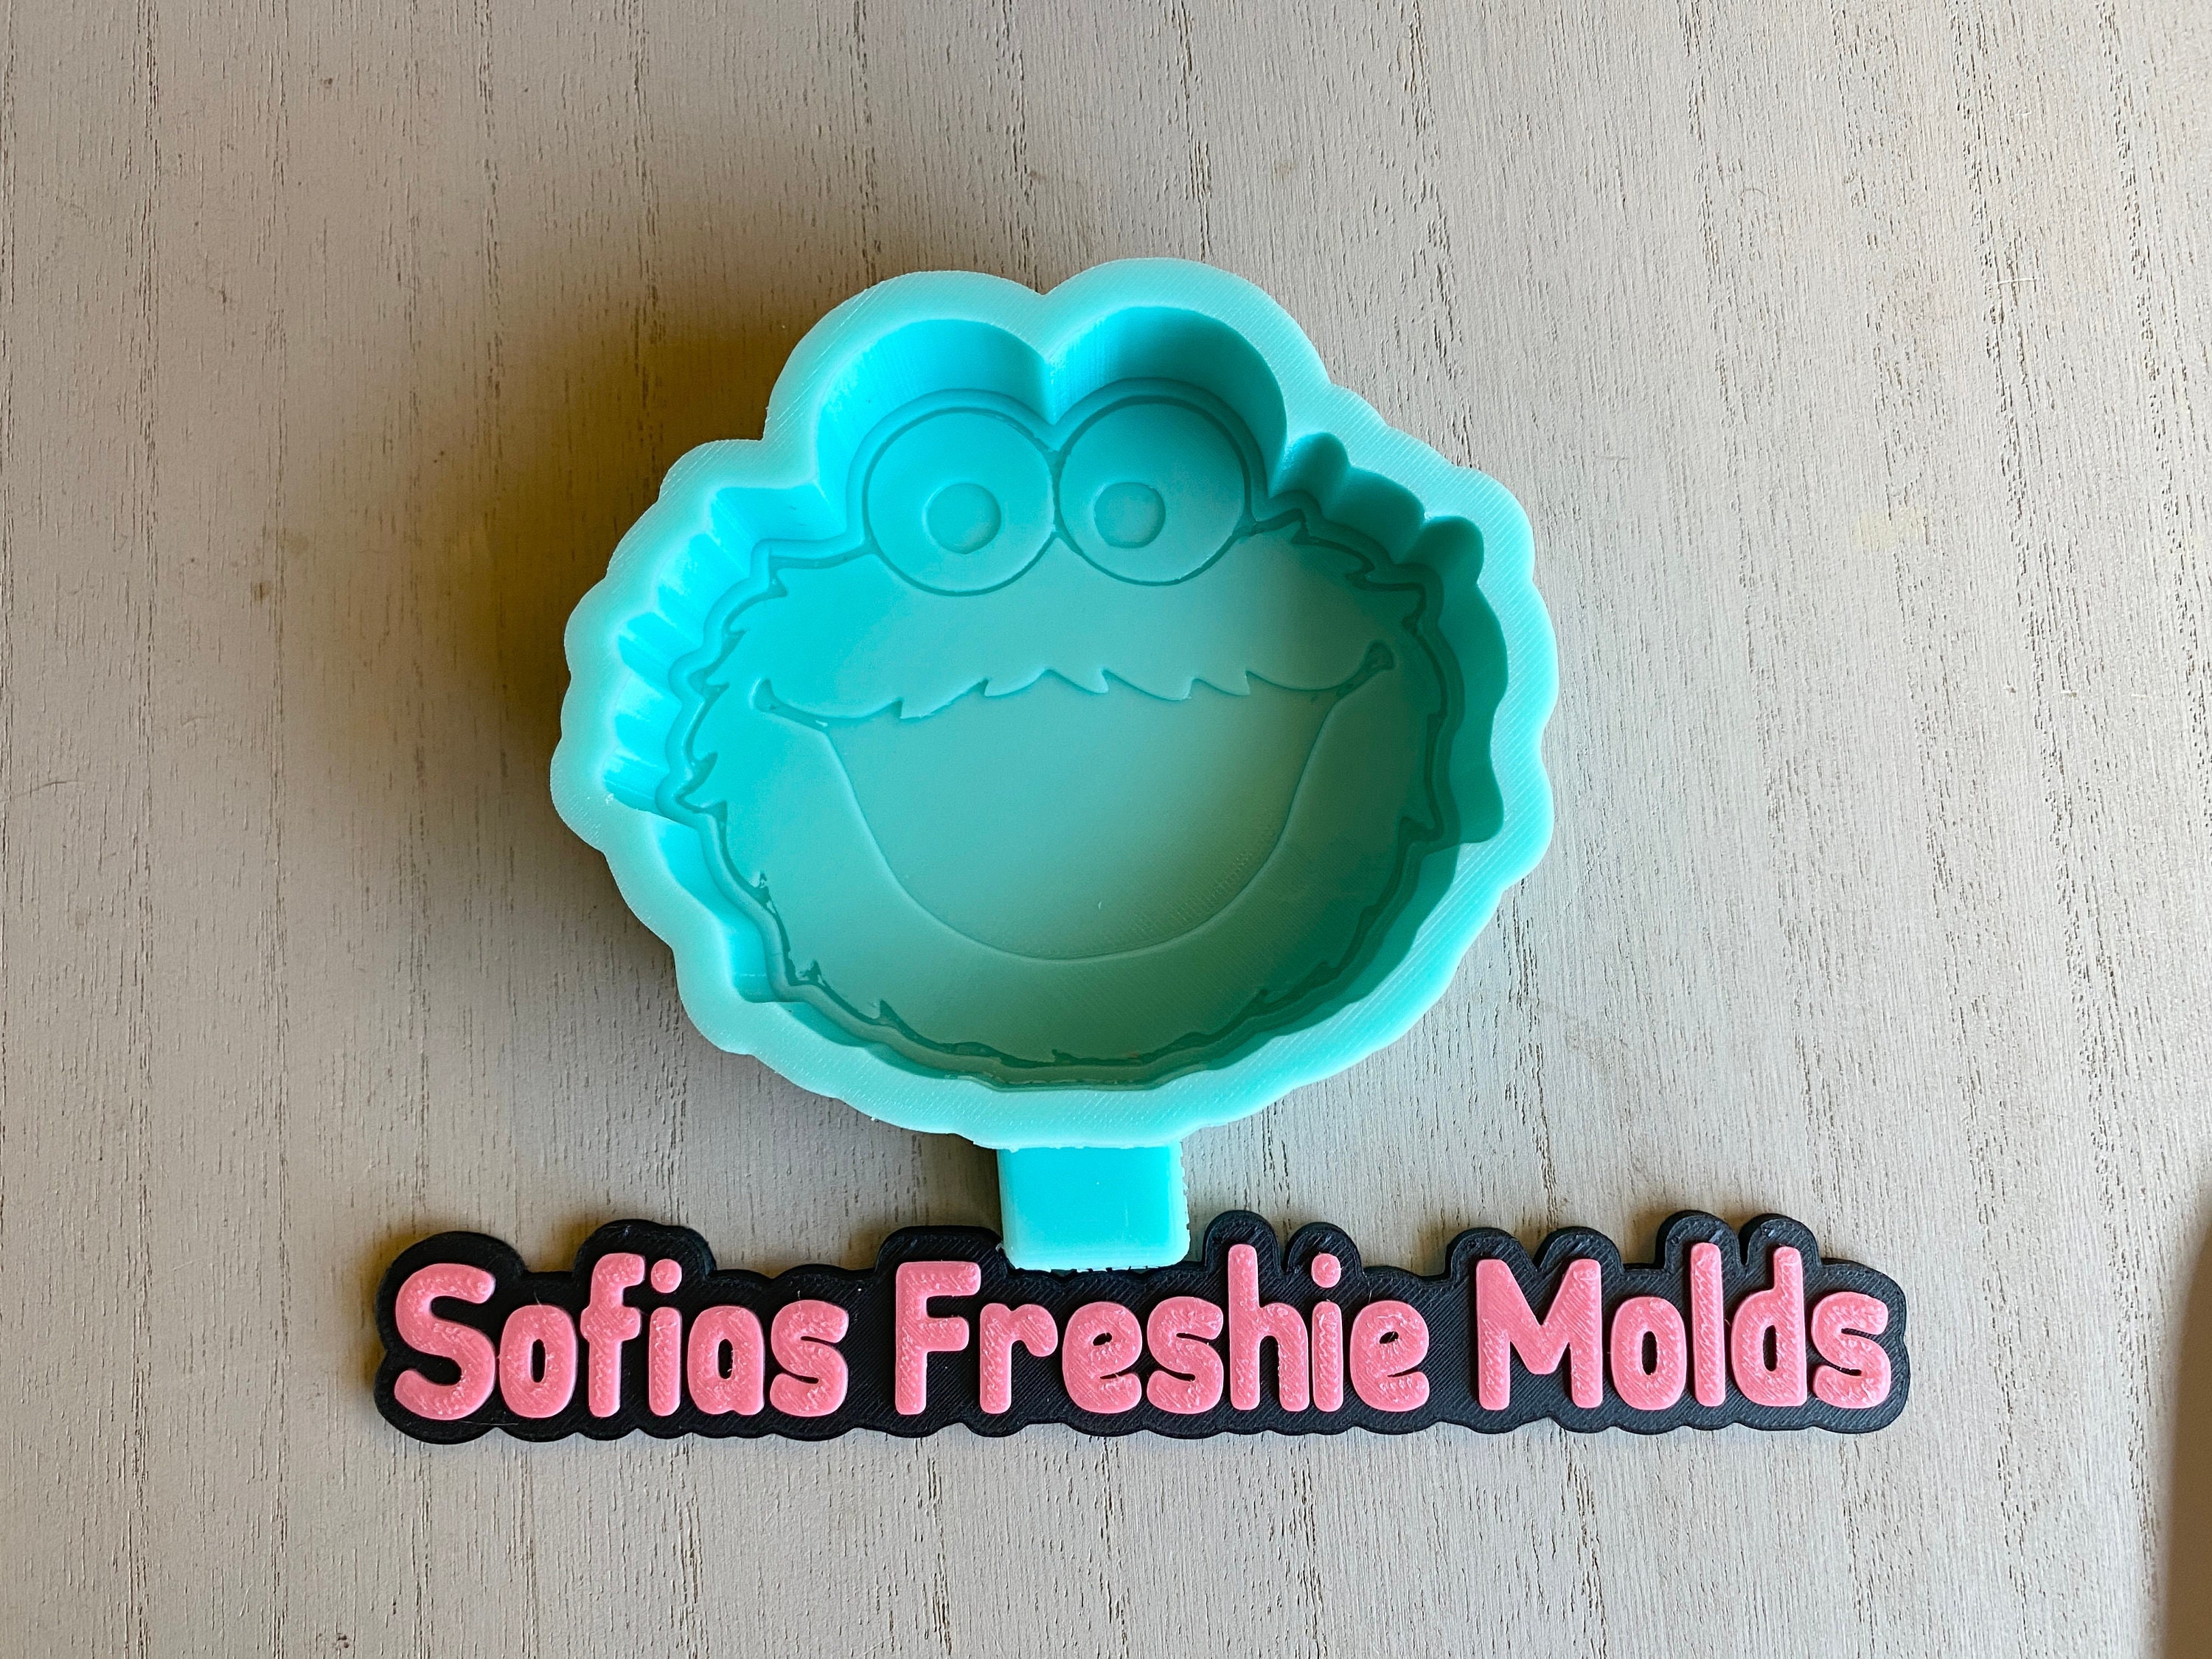 Girl Freshie Mold, Girl Silicone Mold, Freshie Silicone Molds, Silicone  Molds, Molds for Freshies, Car Air Freshener, Freshie Molds, Freshie 